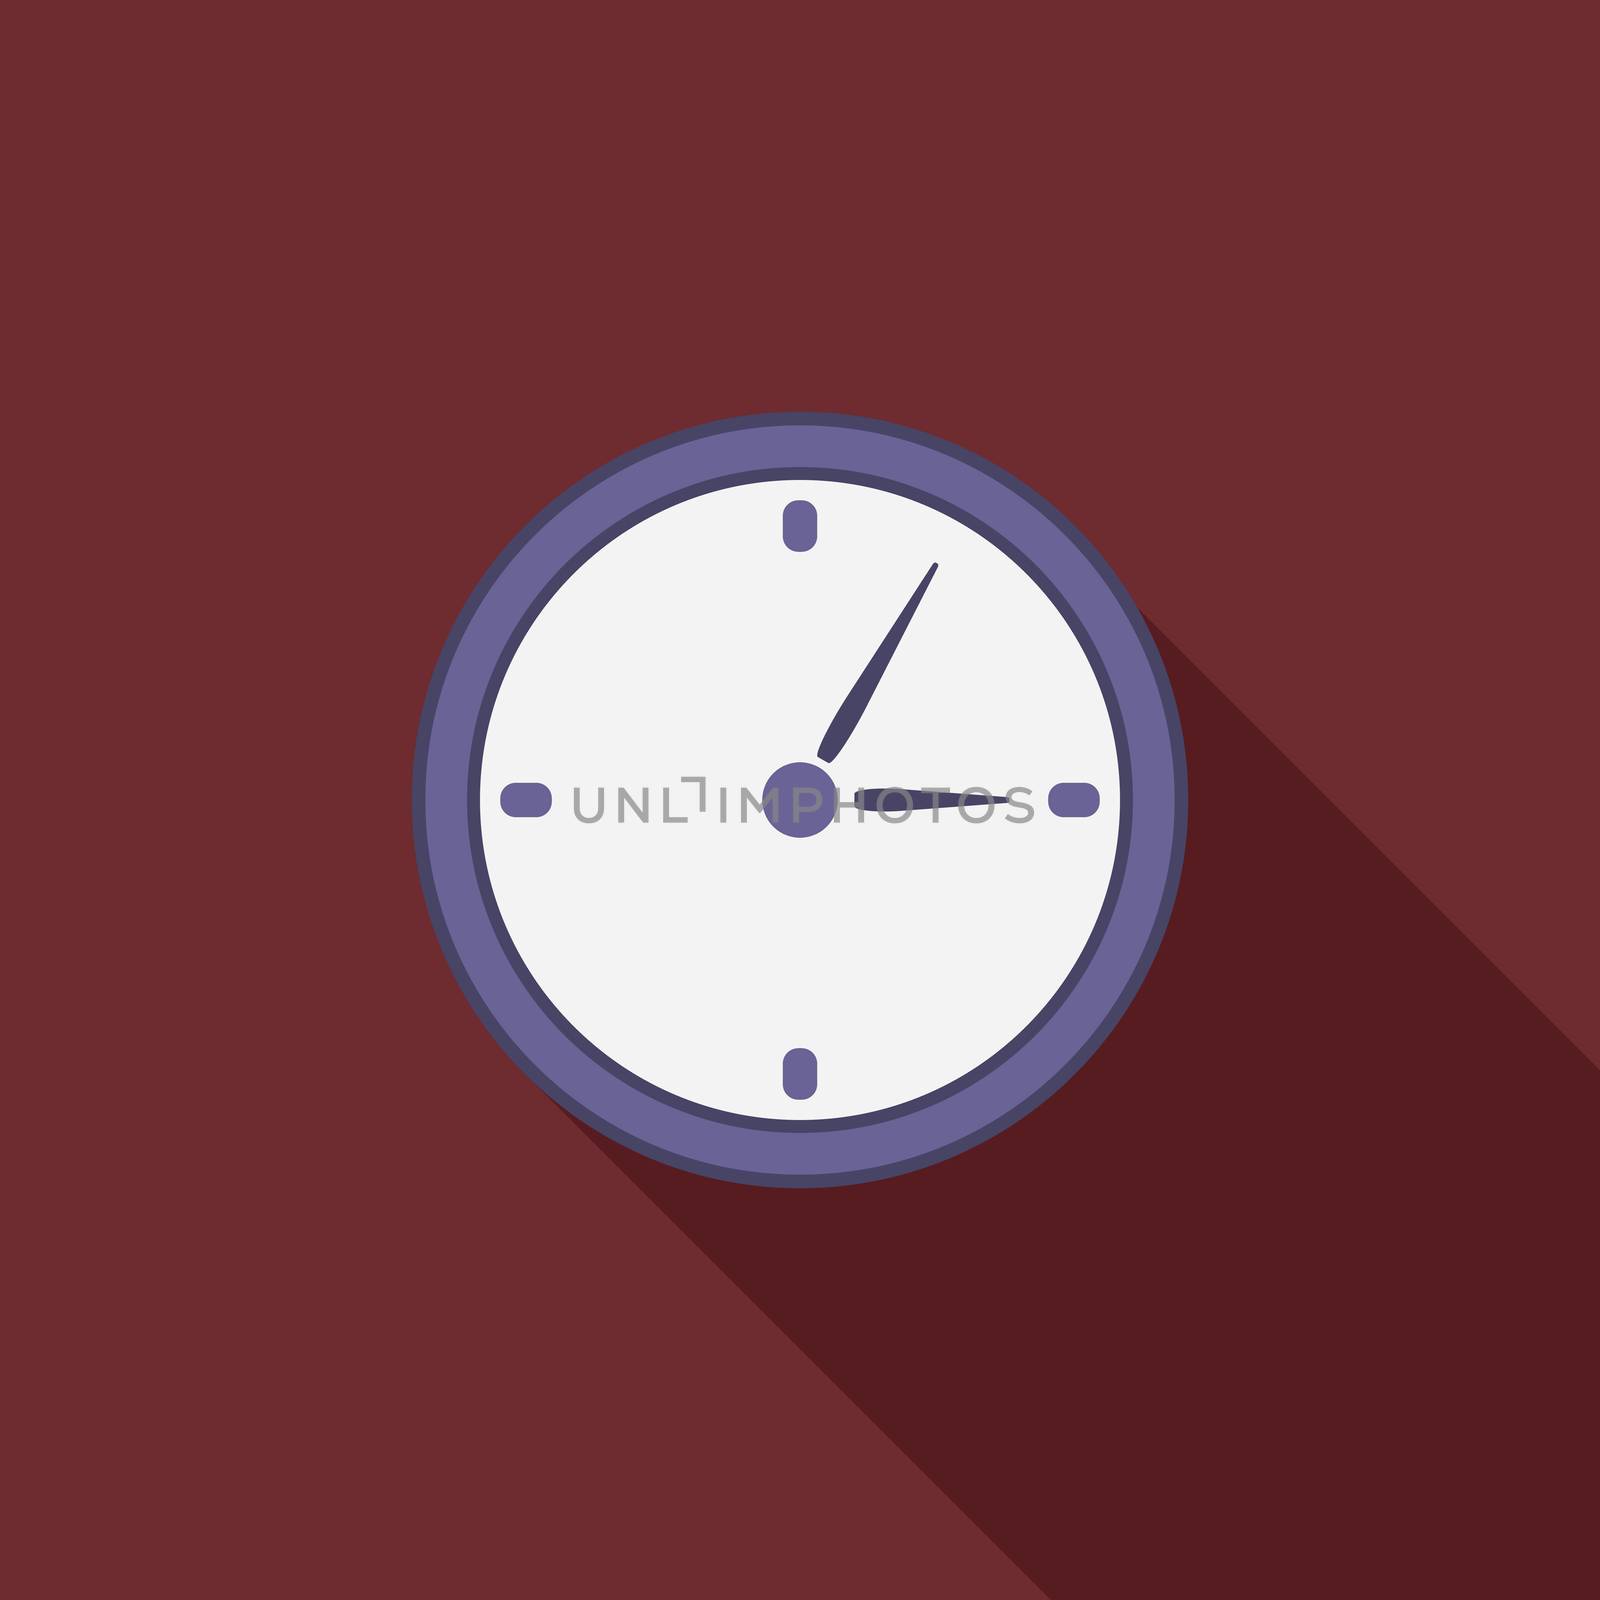 Flat design modern vector illustration of analog clock icon by Lemon_workshop